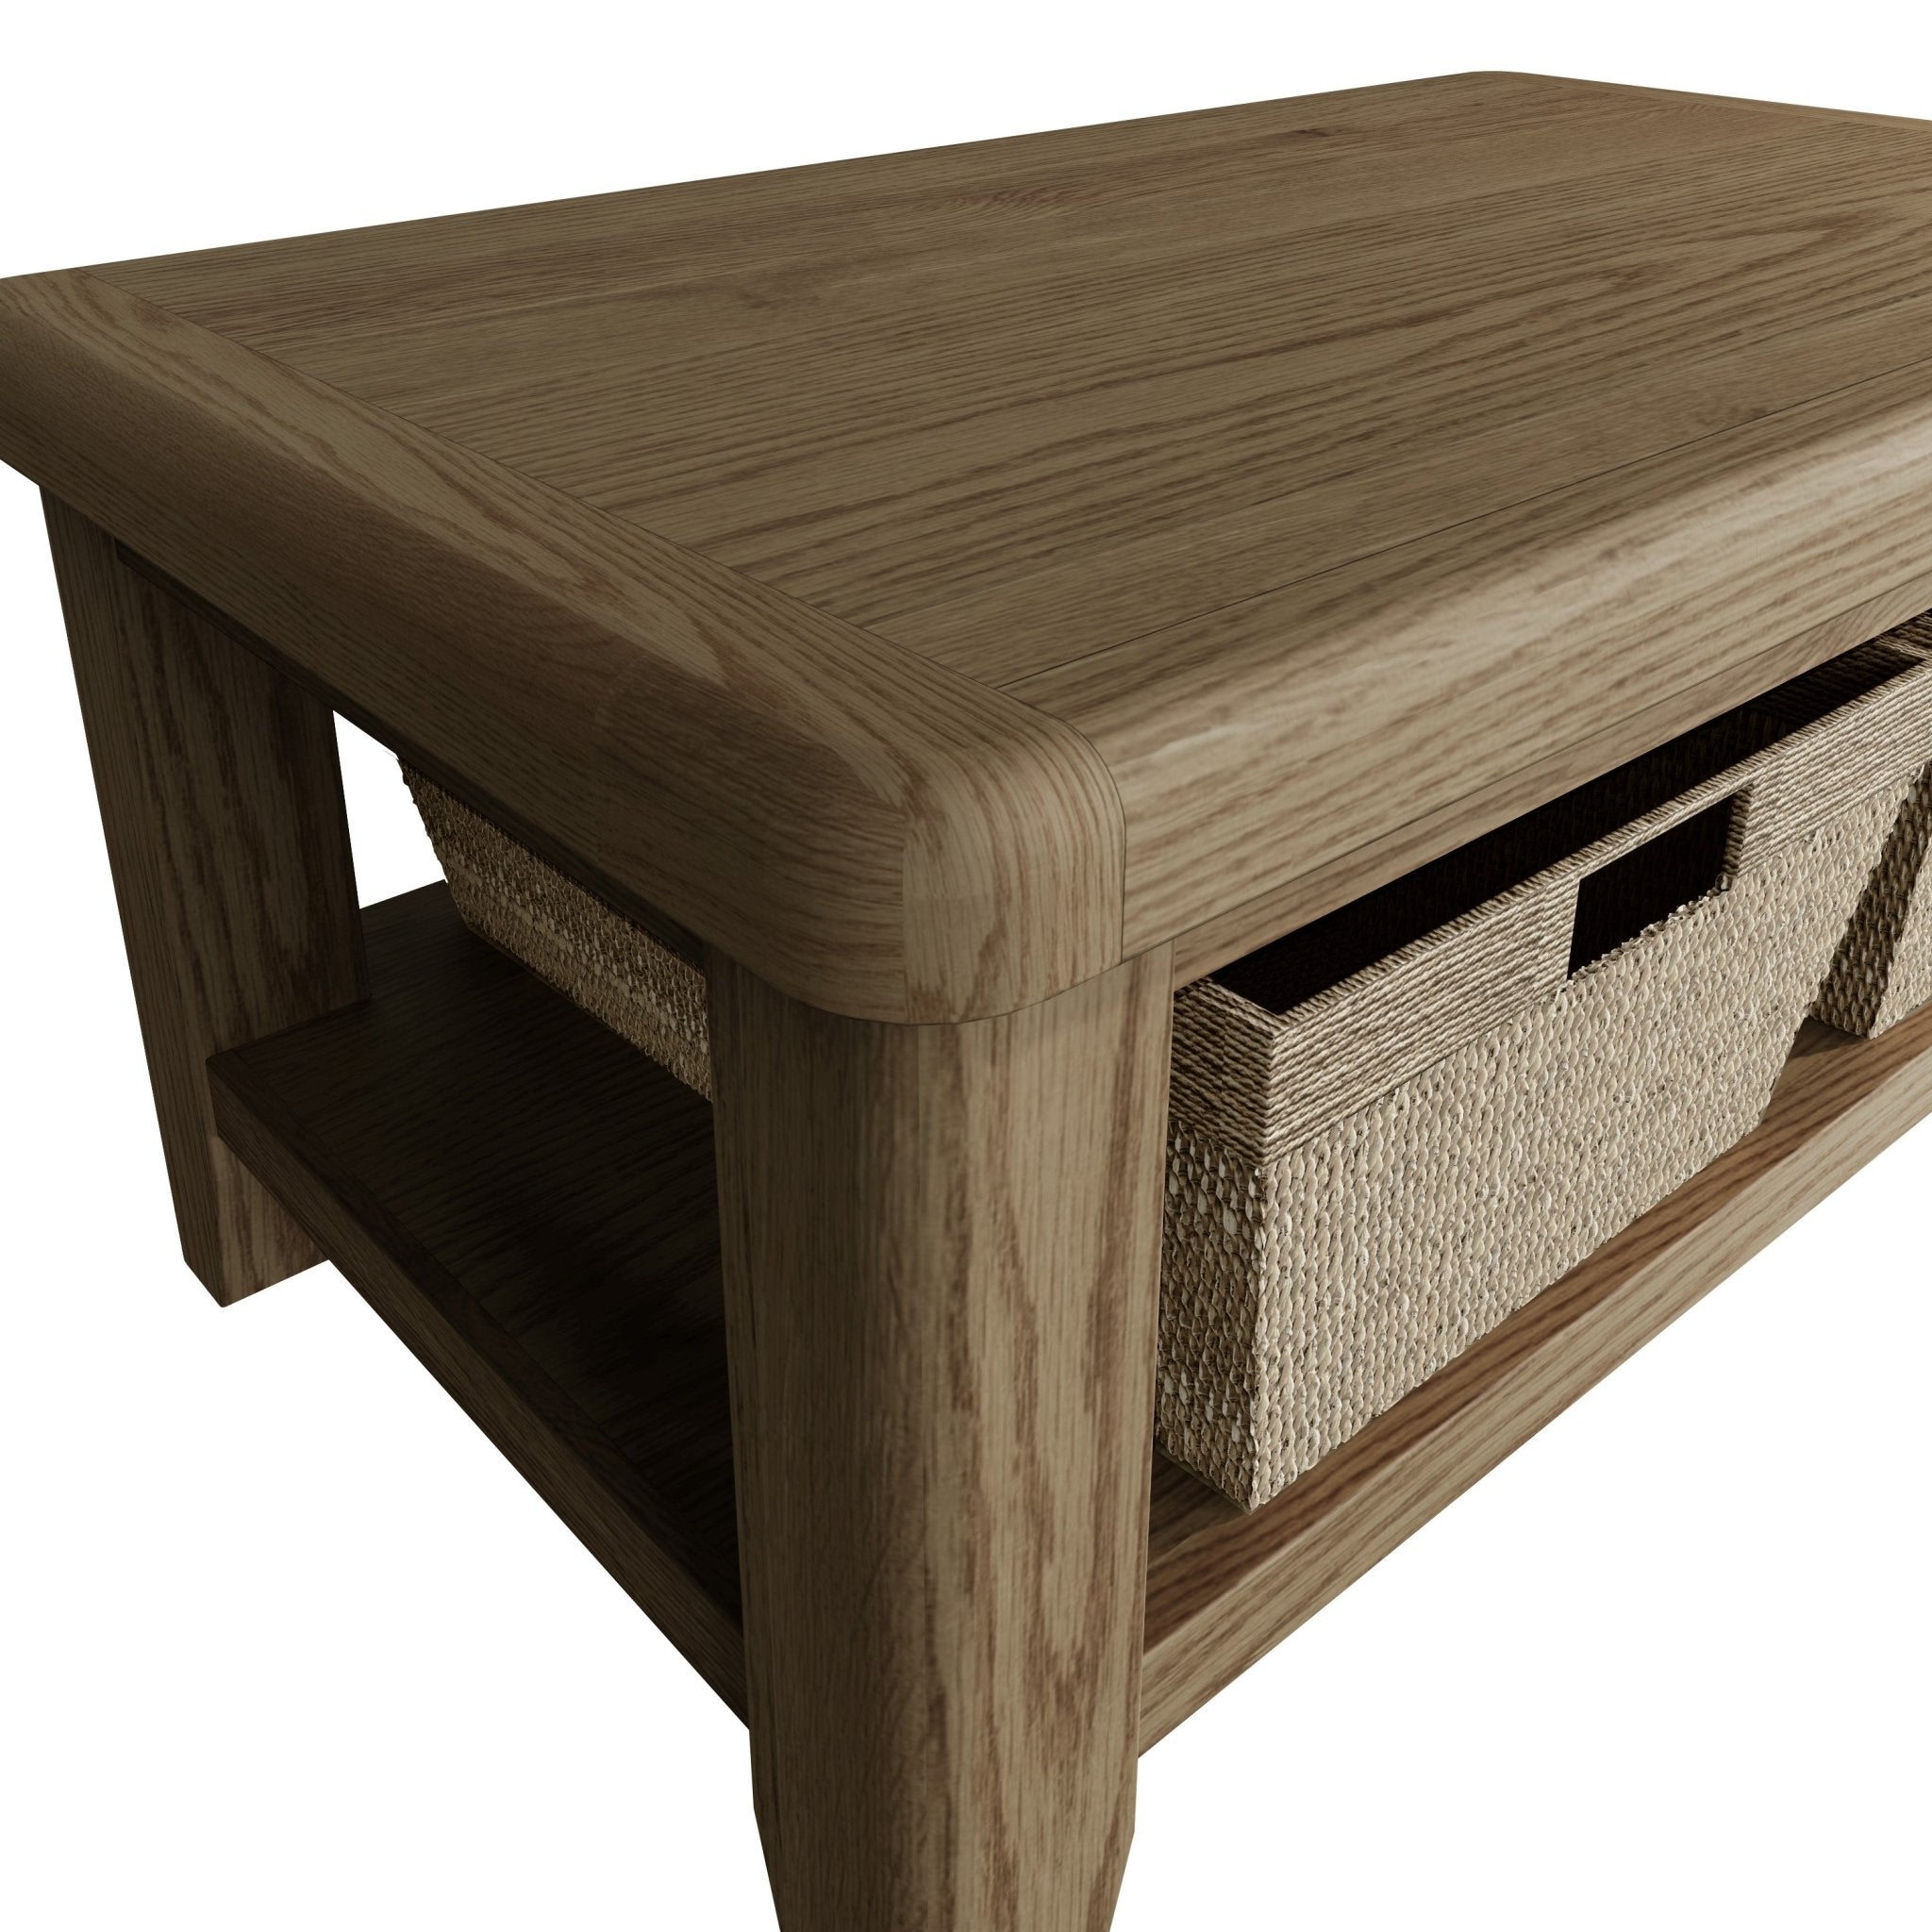 Rusper Oak Coffee Table with Baskets - Duck Barn Interiors